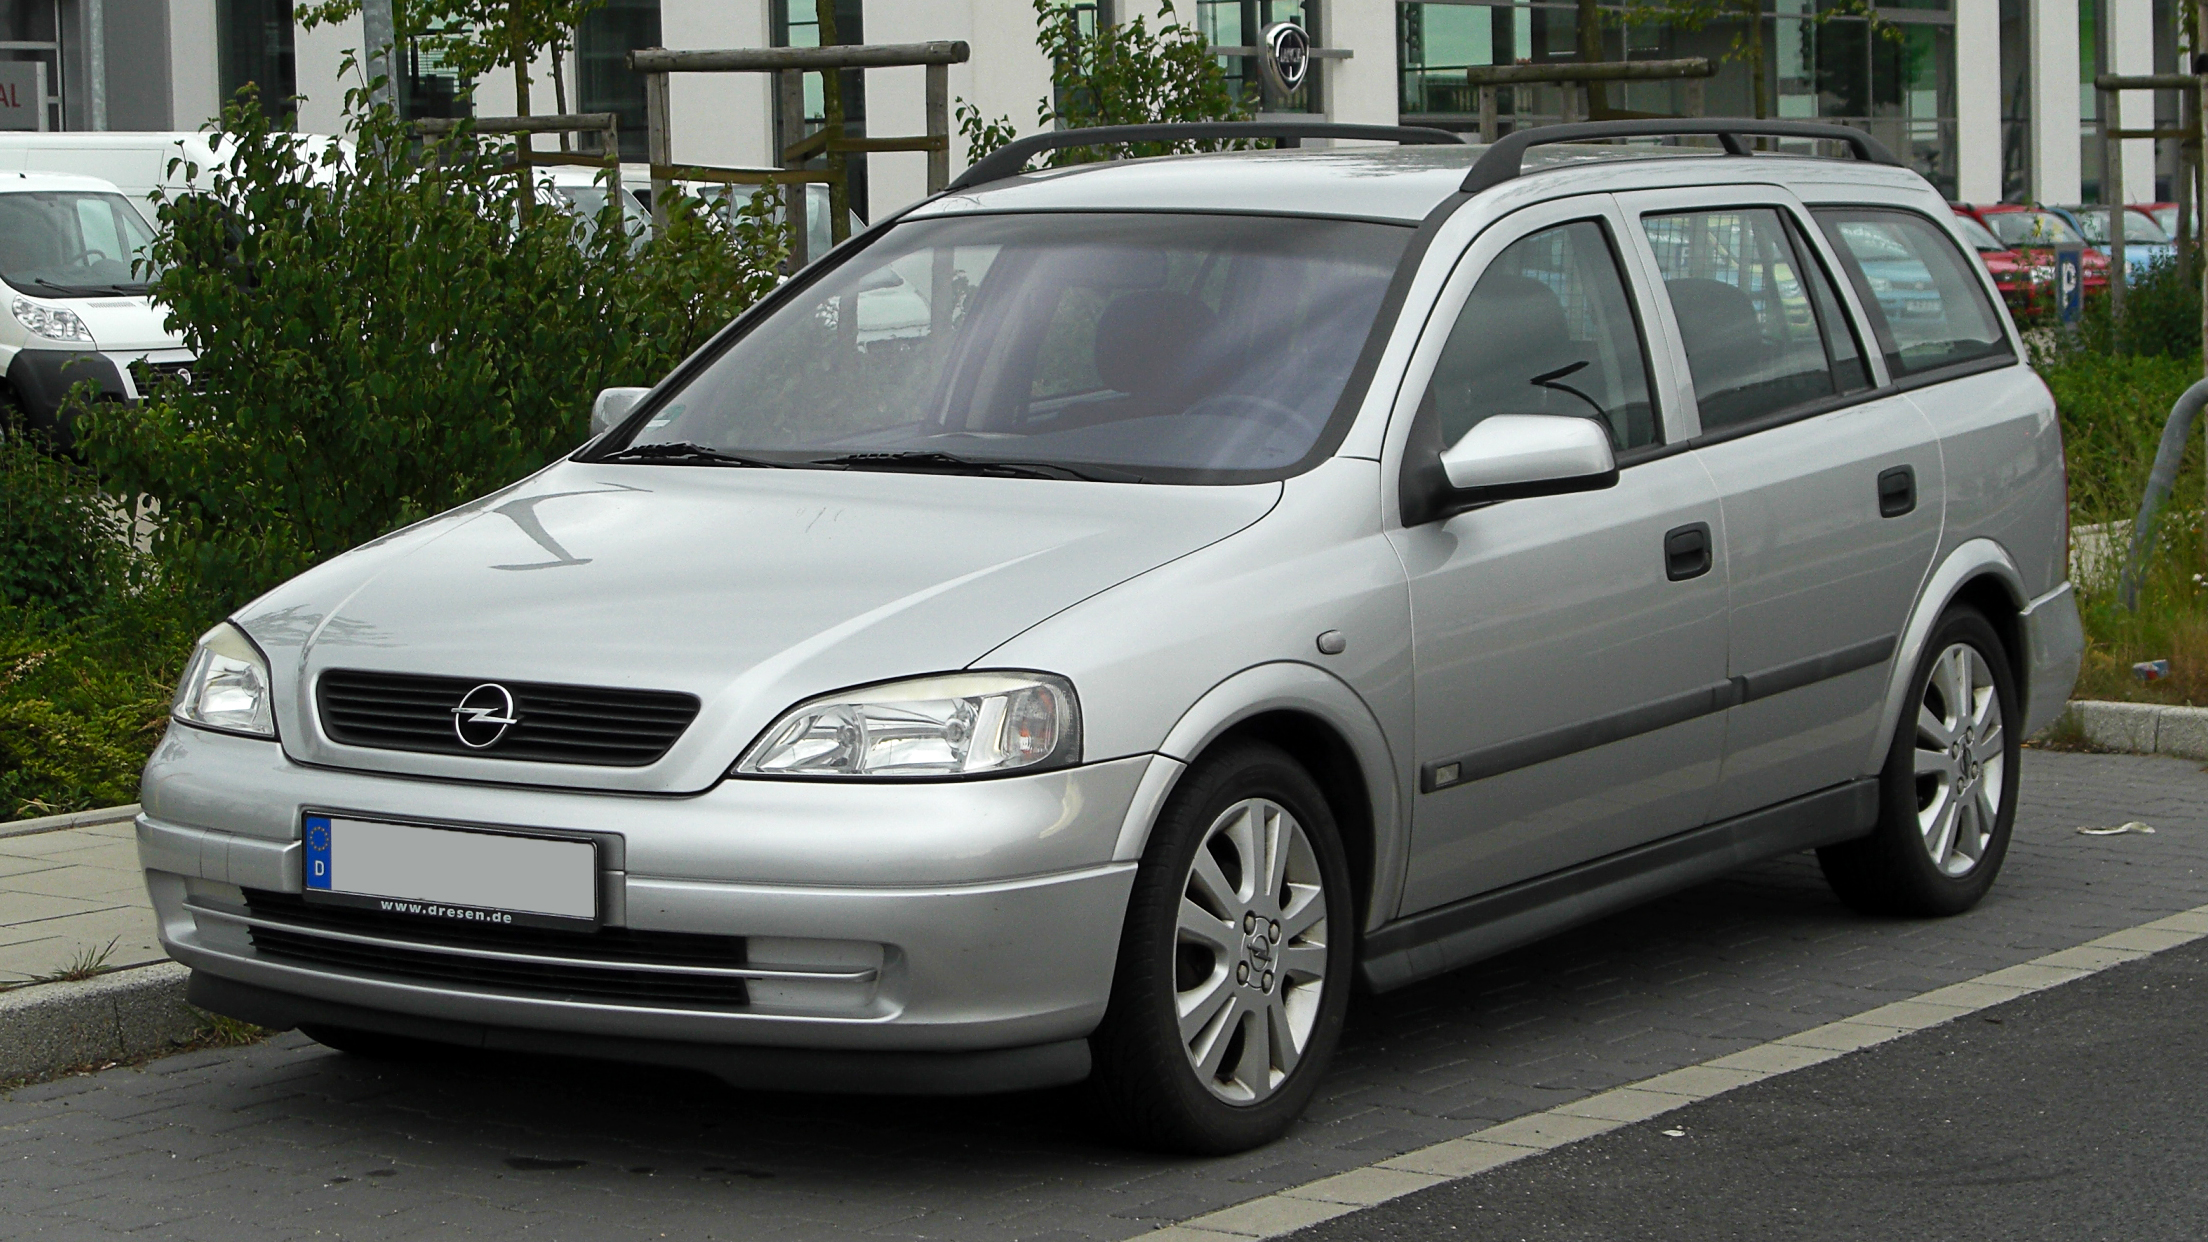 Джи караван. Opel Astra g 1.6 2001. Opel Astra g Caravan 2003. Opel Astra g 2002 1.6.